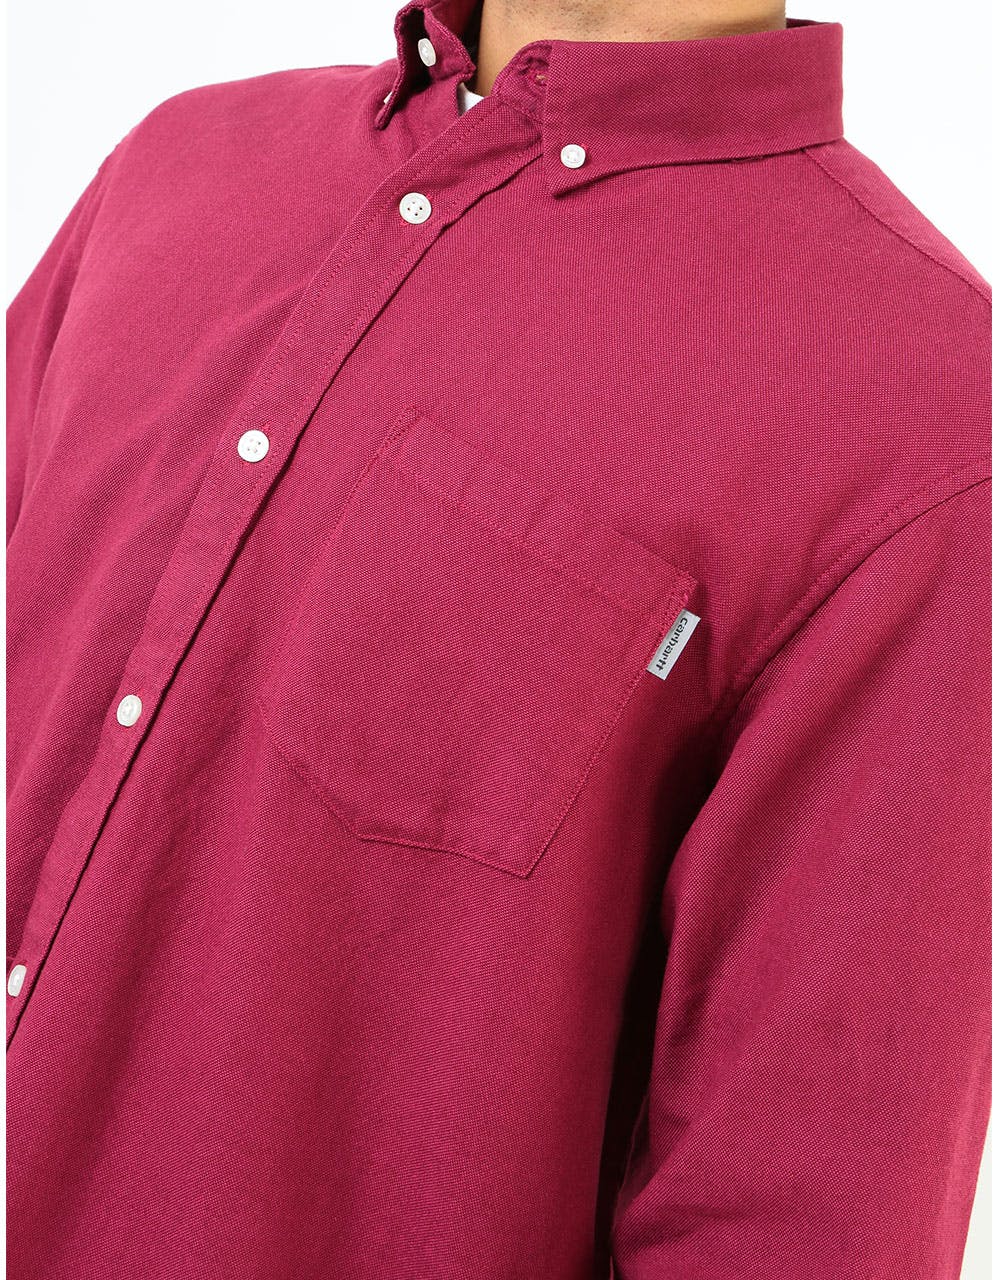 Carhartt WIP L/S Dalton Shirt - Cranberry/Tango (Heavy Rinsed)